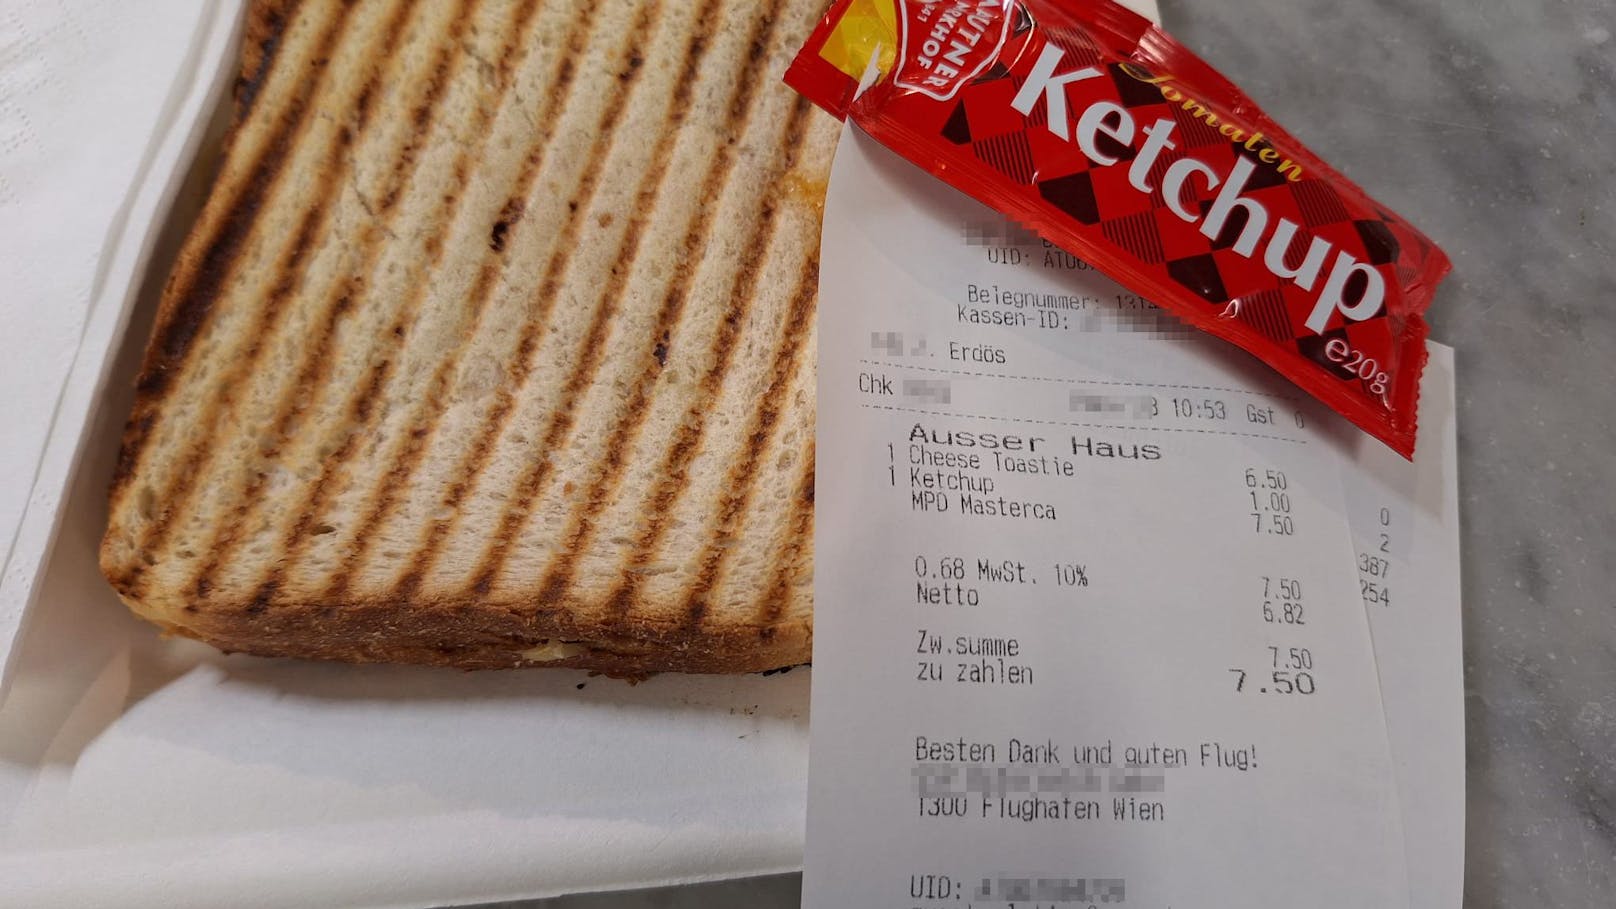 Preis-Hammer! Käsetoast mit Ketchup kostet 7,50 Euro